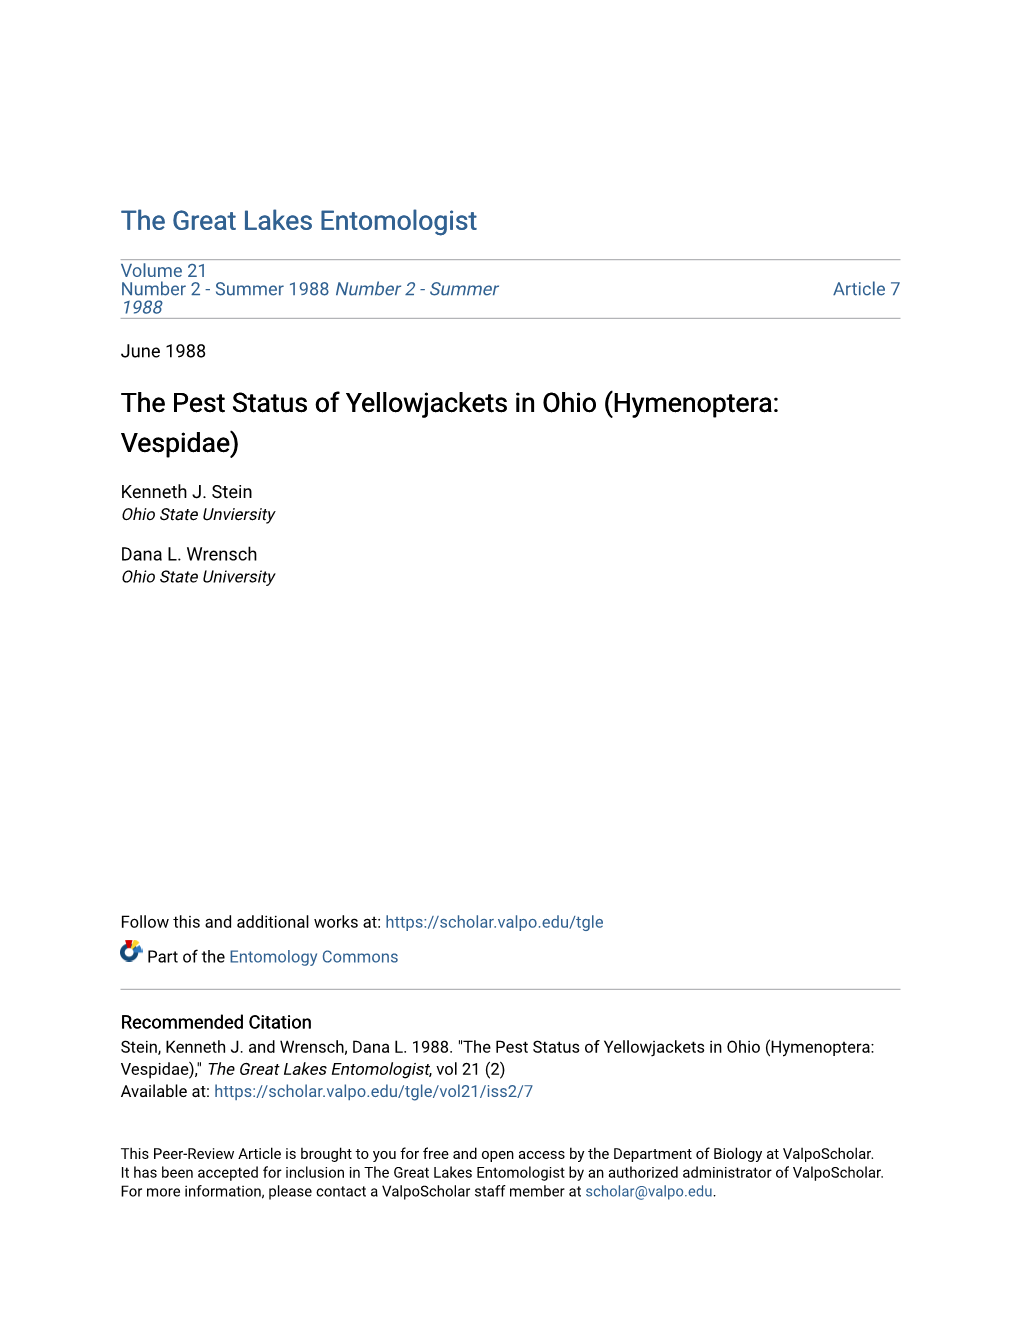 The Pest Status of Yellowjackets in Ohio (Hymenoptera: Vespidae)